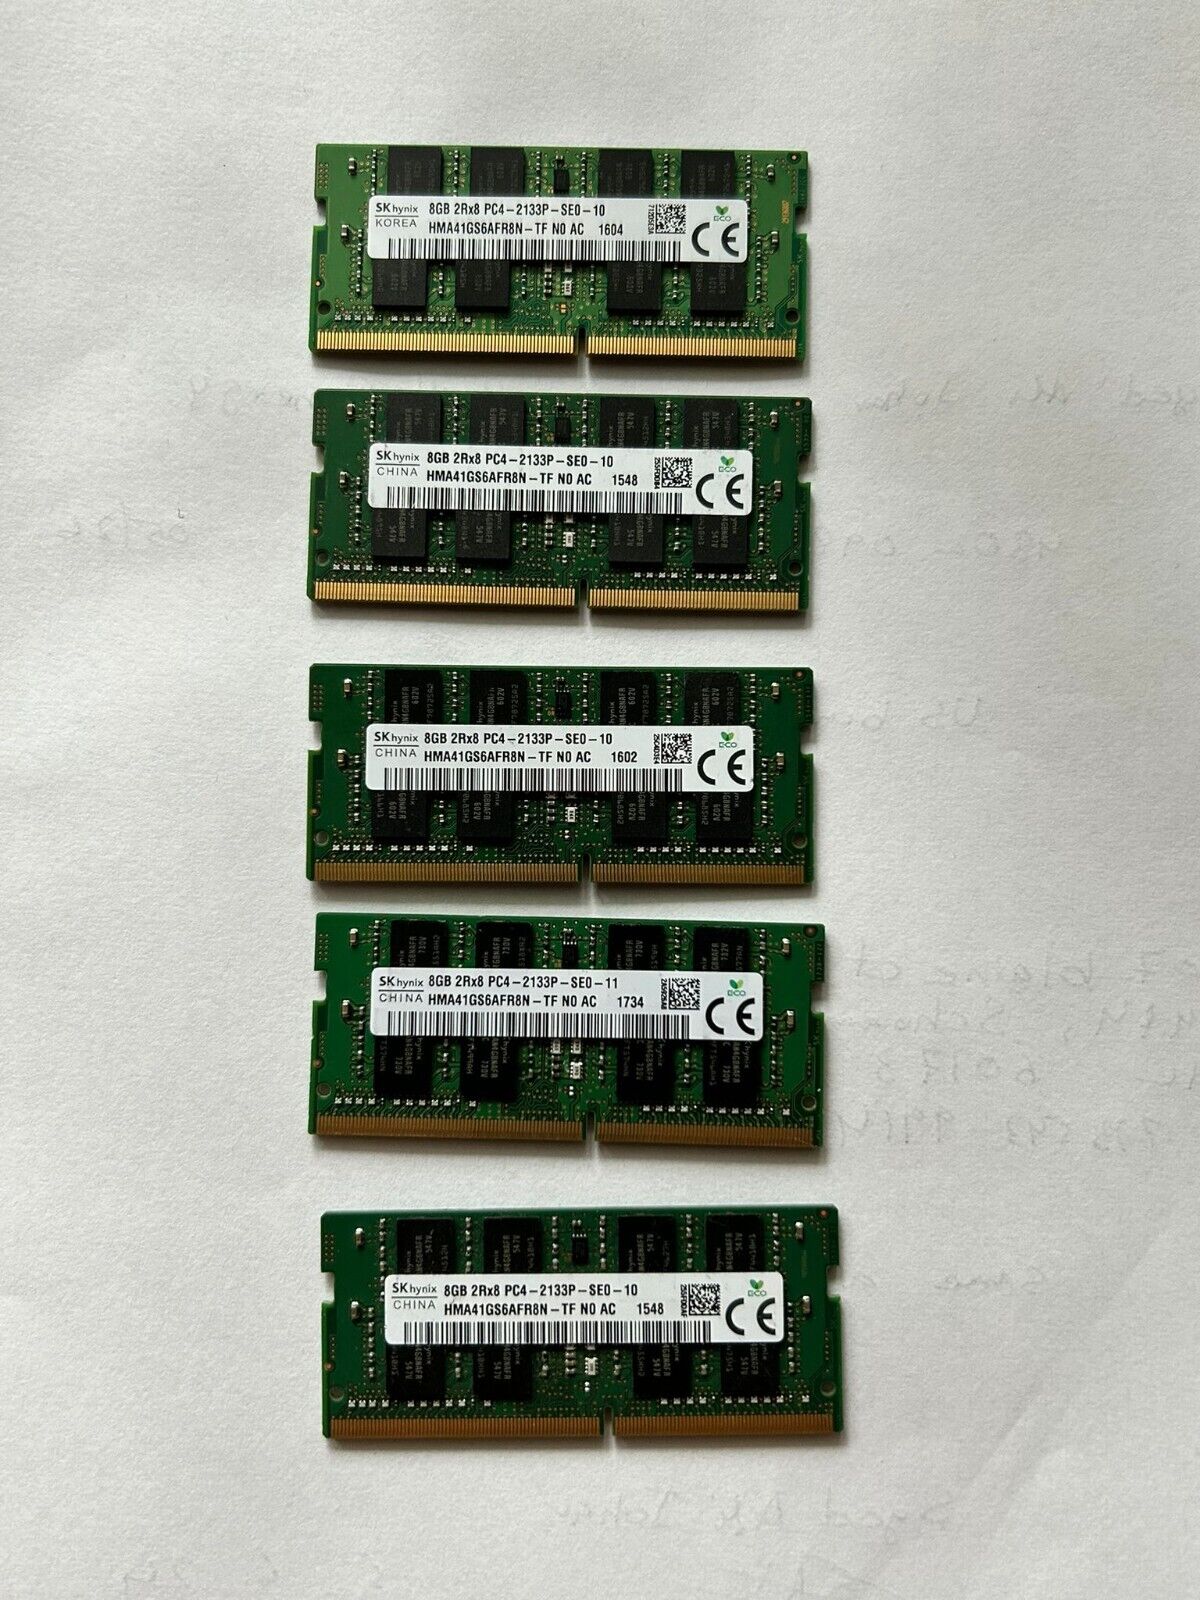 SK Hynix 8GB DDR4 Laptop Memory (2Rx8 PC4-2133P-SE0-10) - 5-Pack